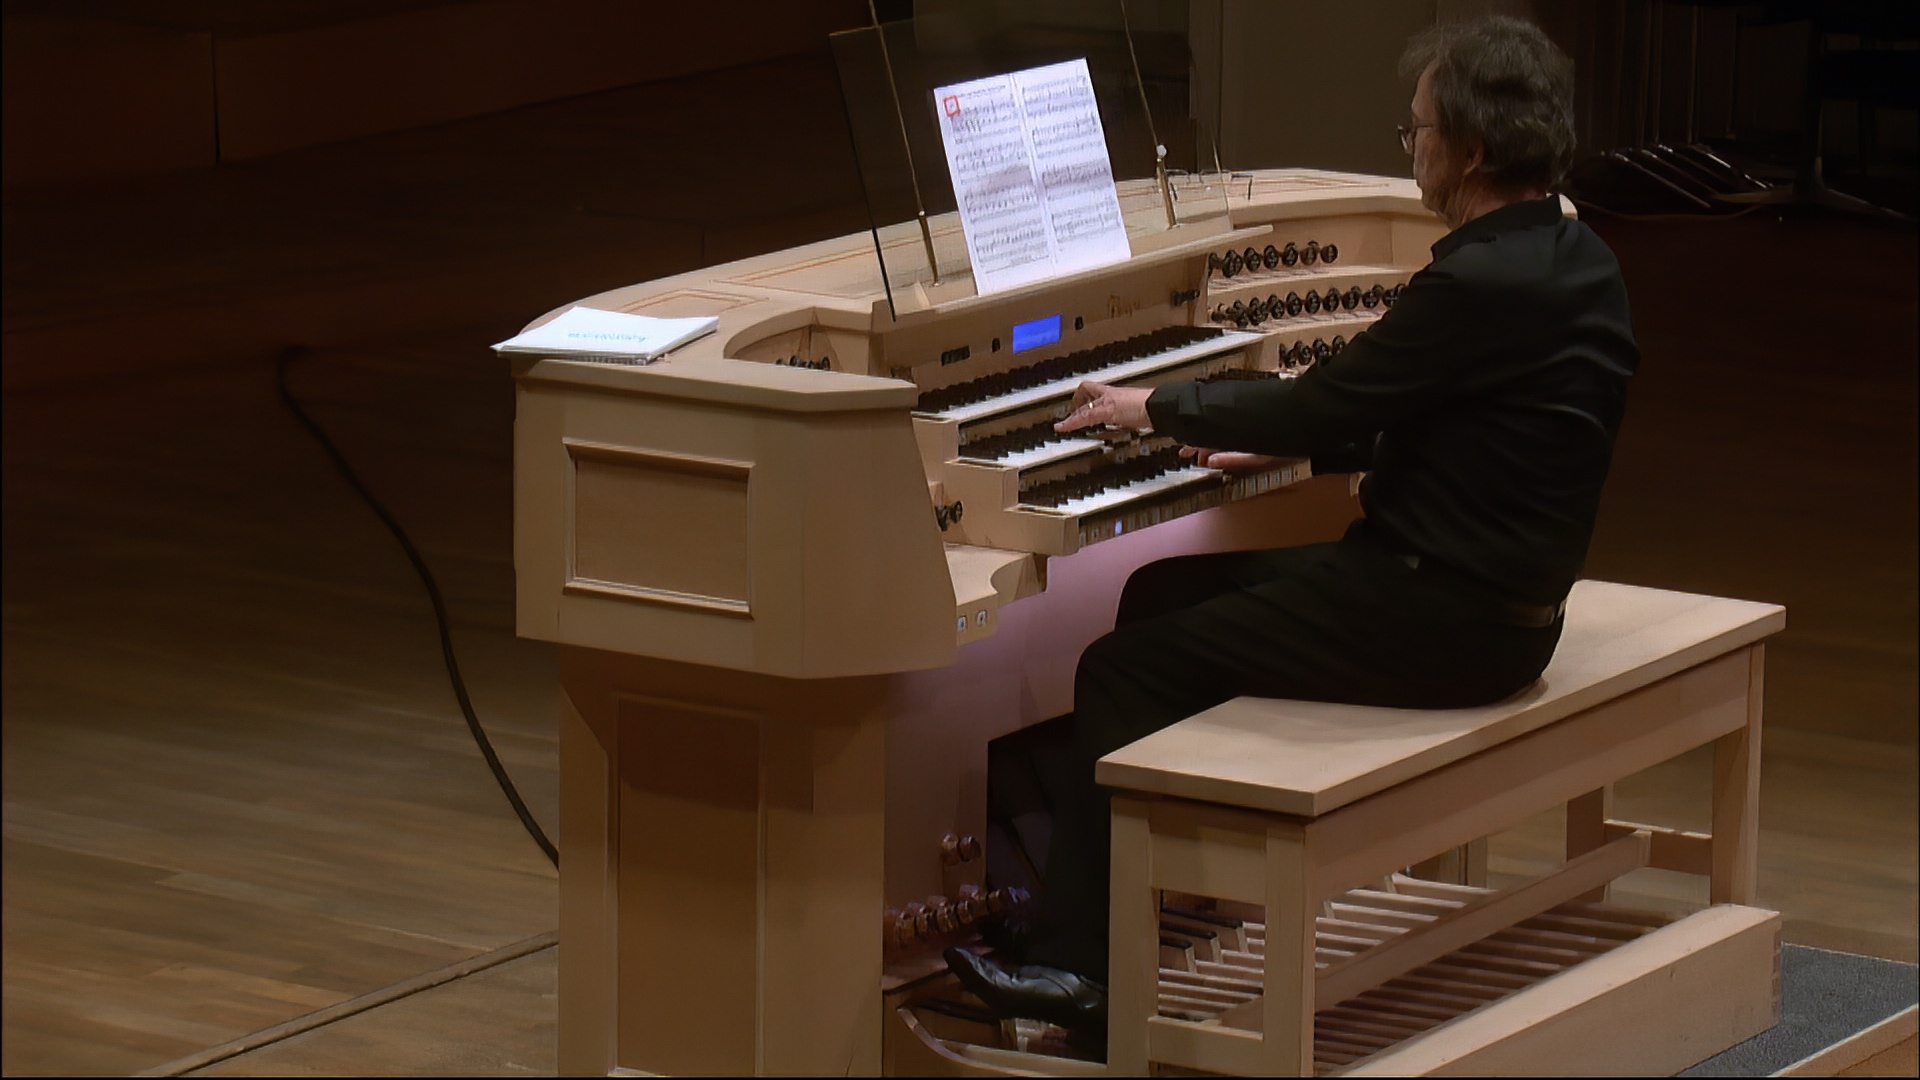 Organový recitál II – Willibald Guggenmos